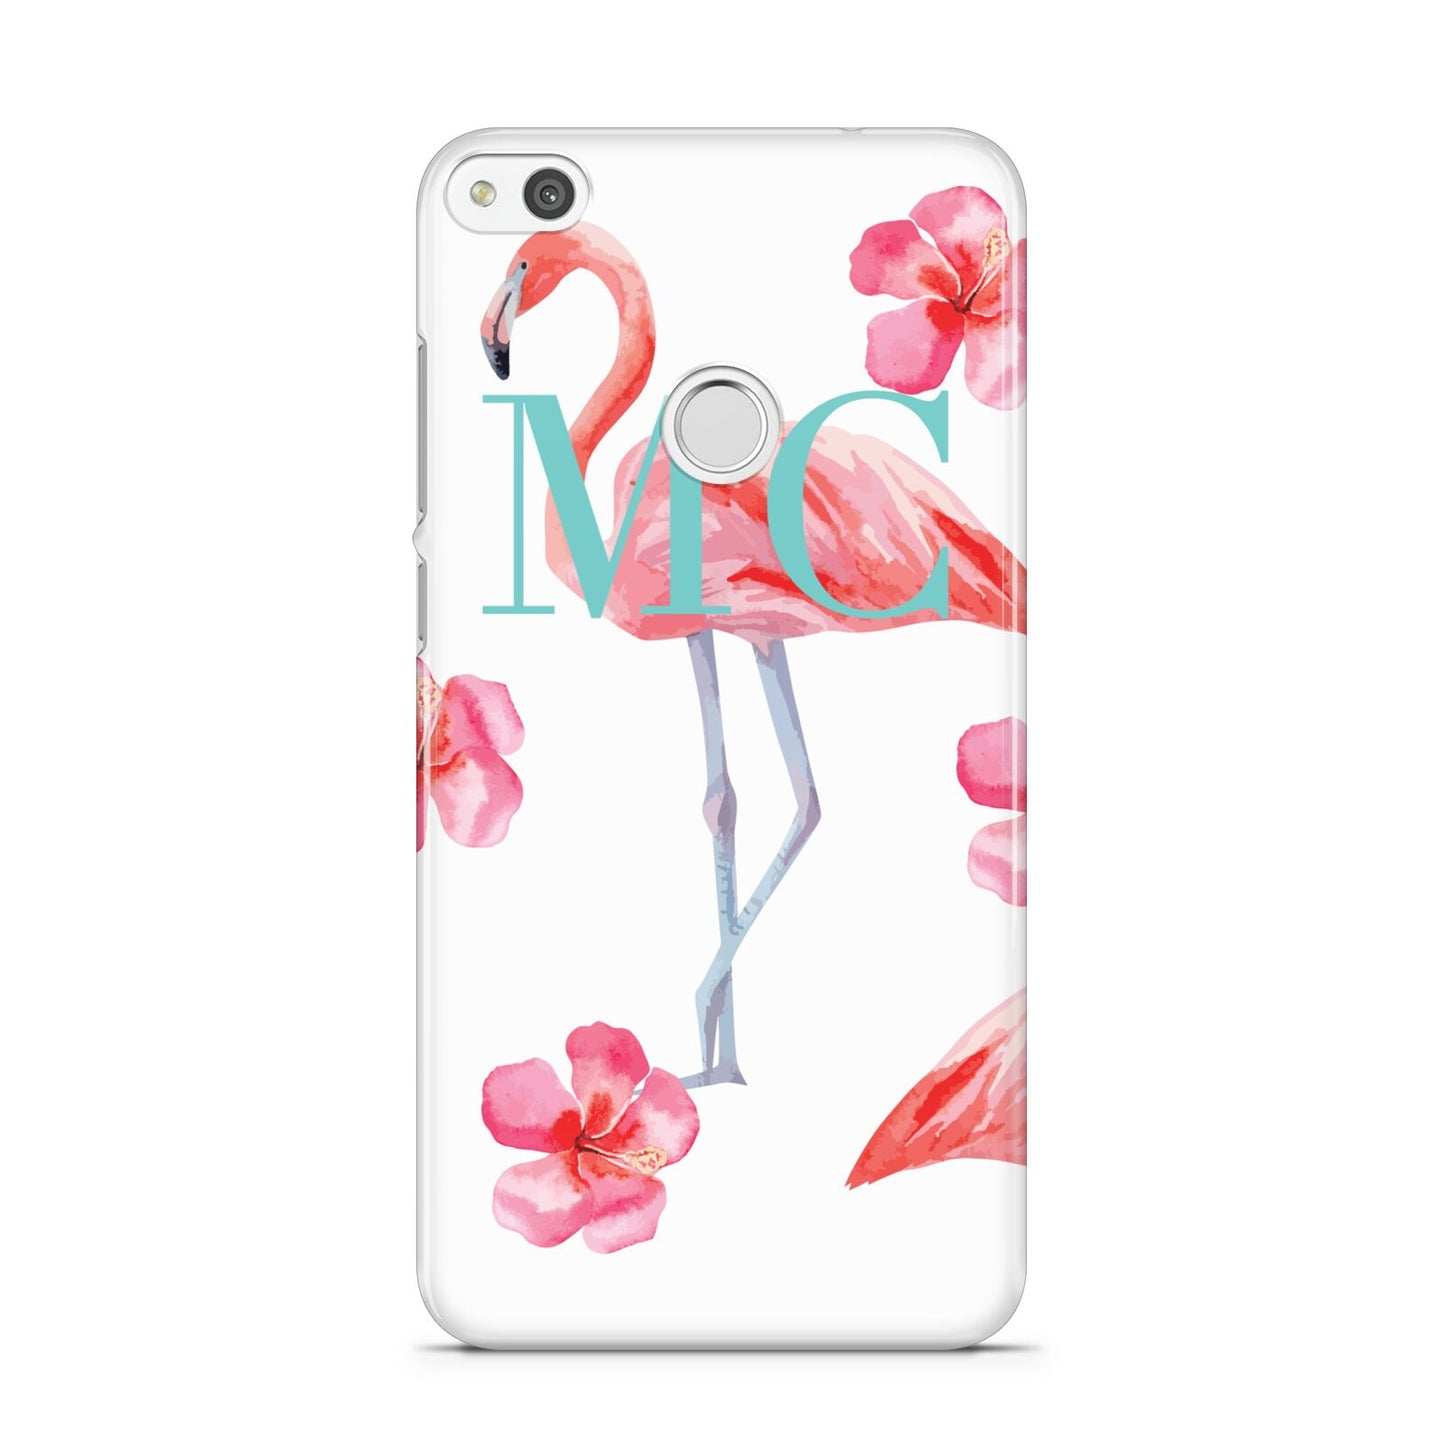 Personalised Initials Flamingo 3 Huawei P8 Lite Case